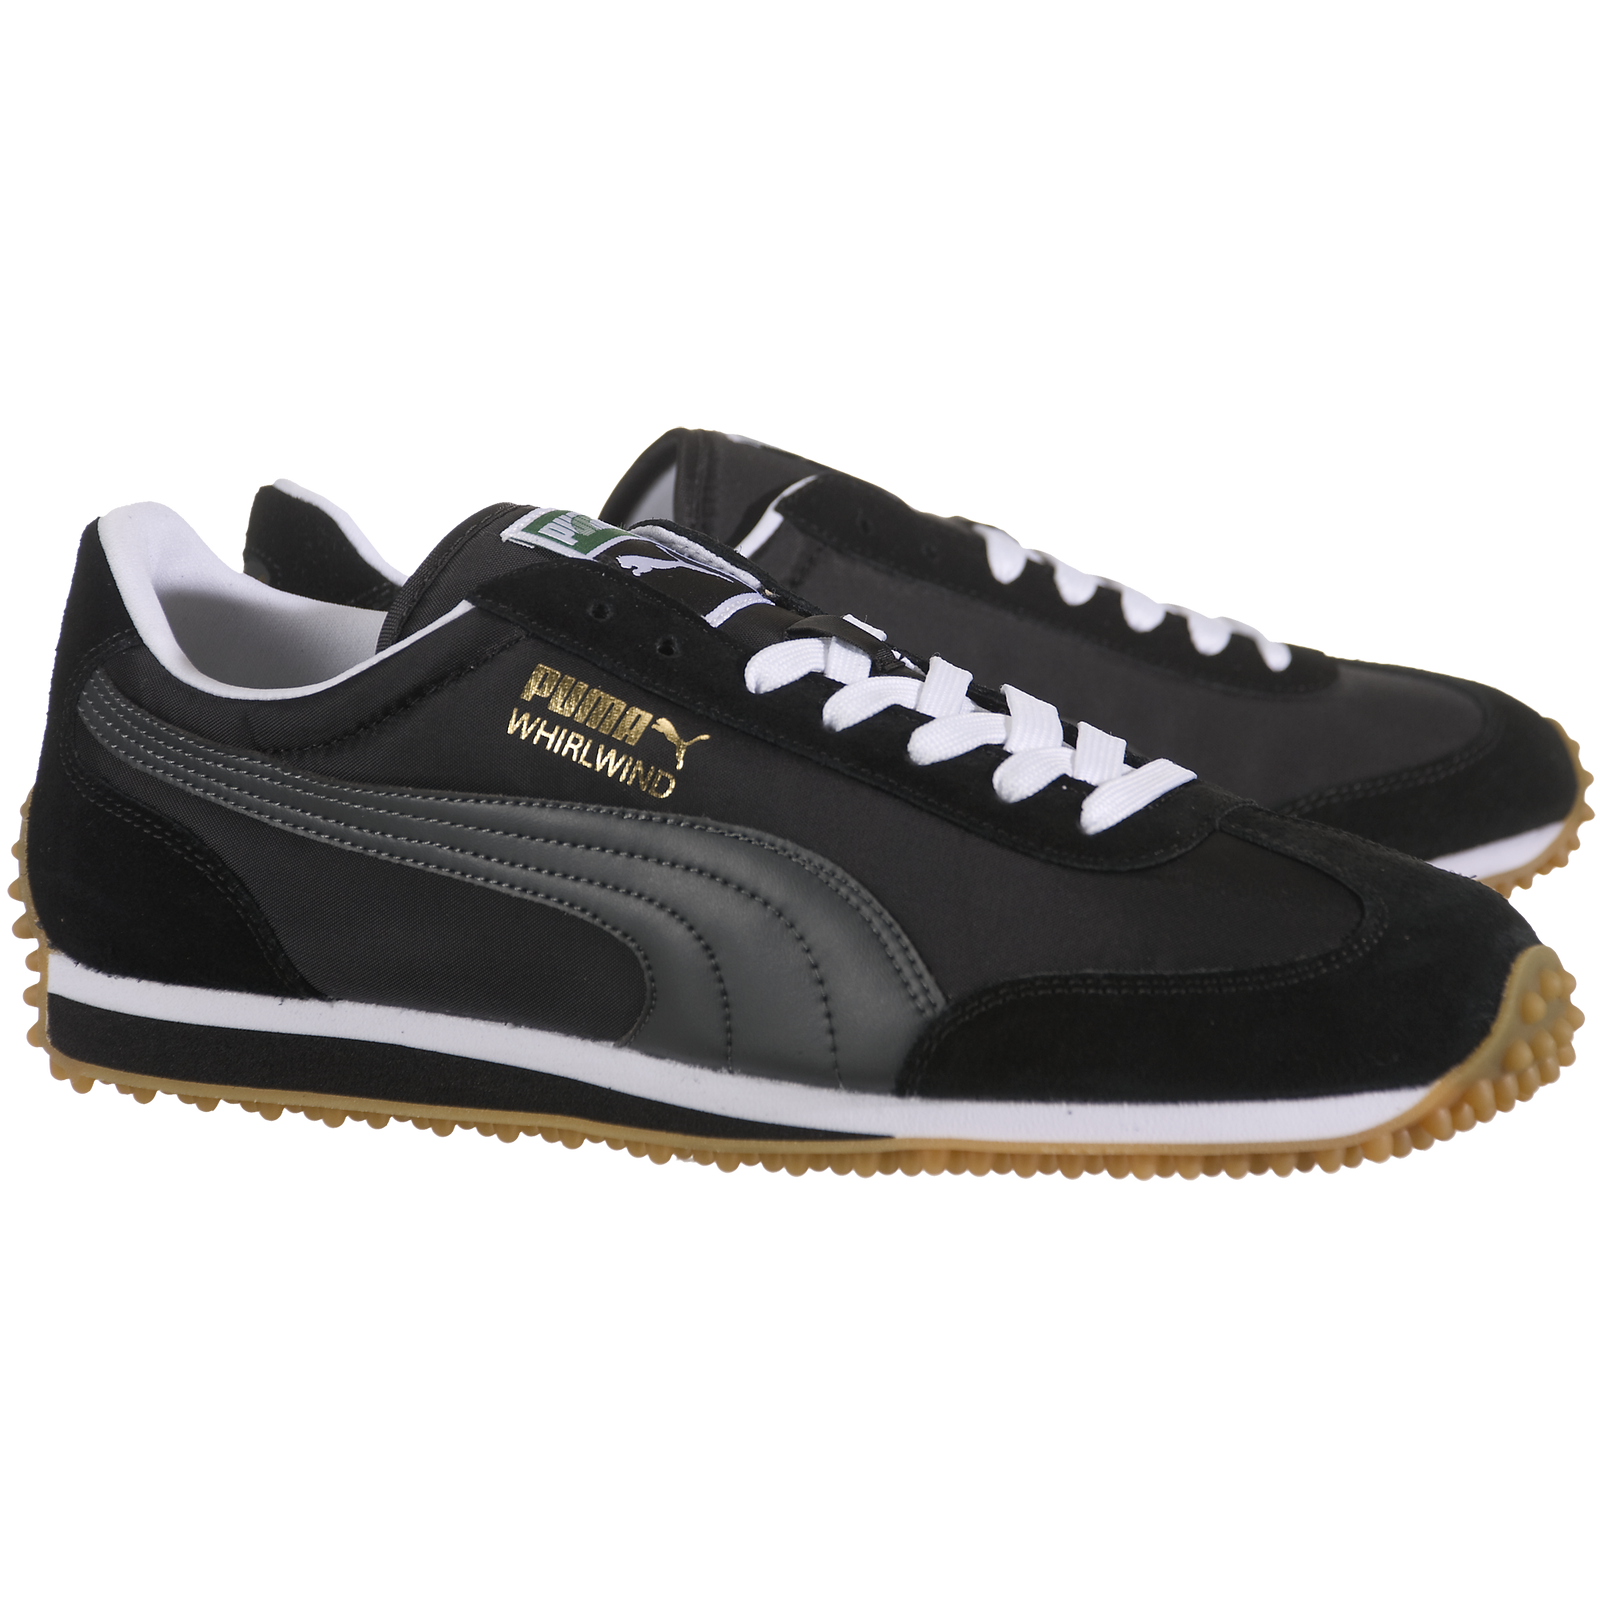 Puma Whirlwind Classic - 35129333 - Sneakerhead.com – SNEAKERHEAD.com